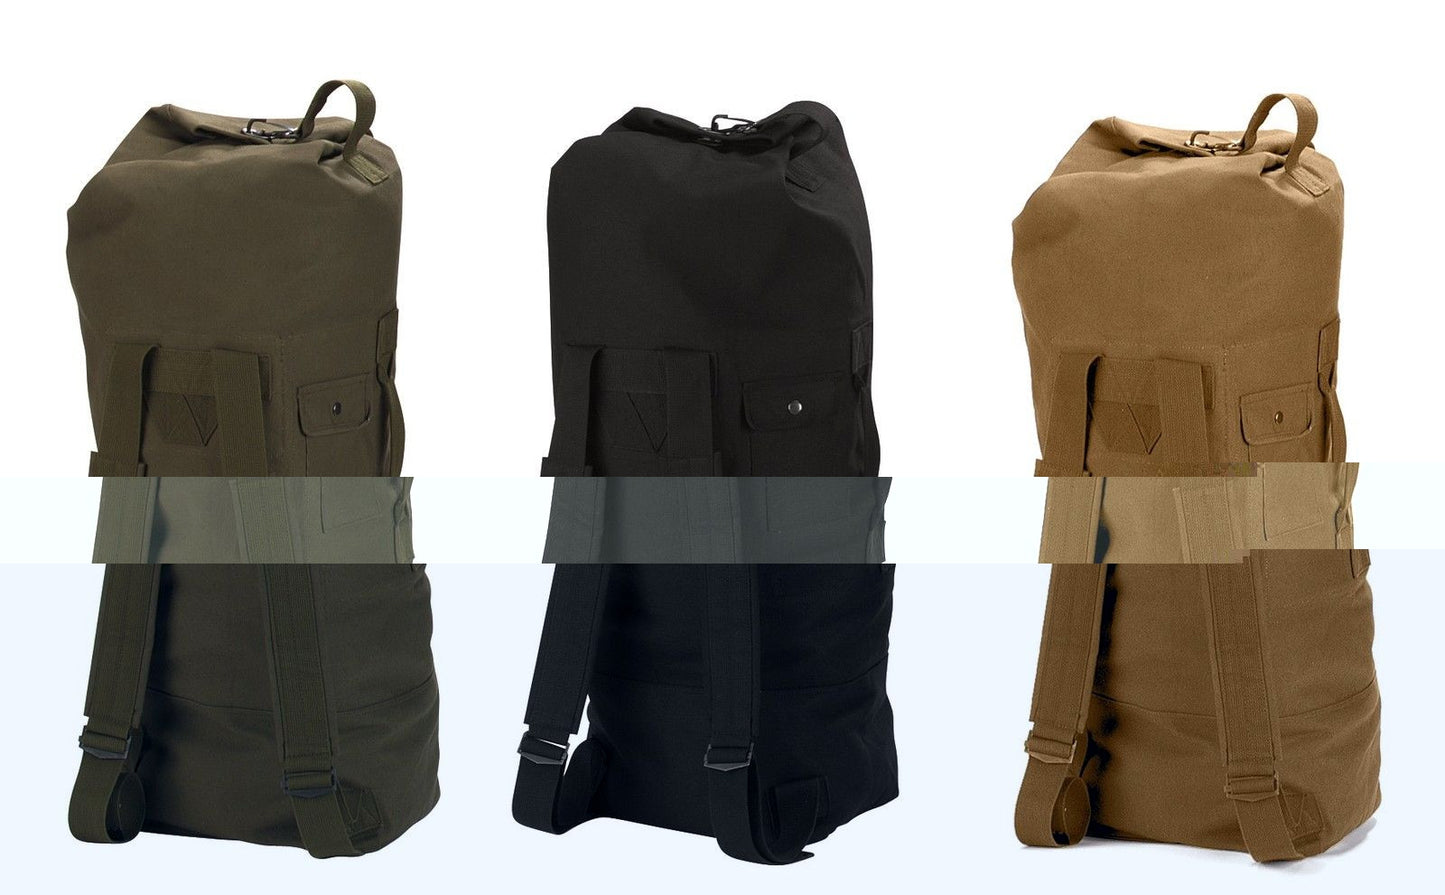 G.I. Type Canvas Double Strap Duffle Bag - Sports Bag - Gym Bag-Black, OD, Brown